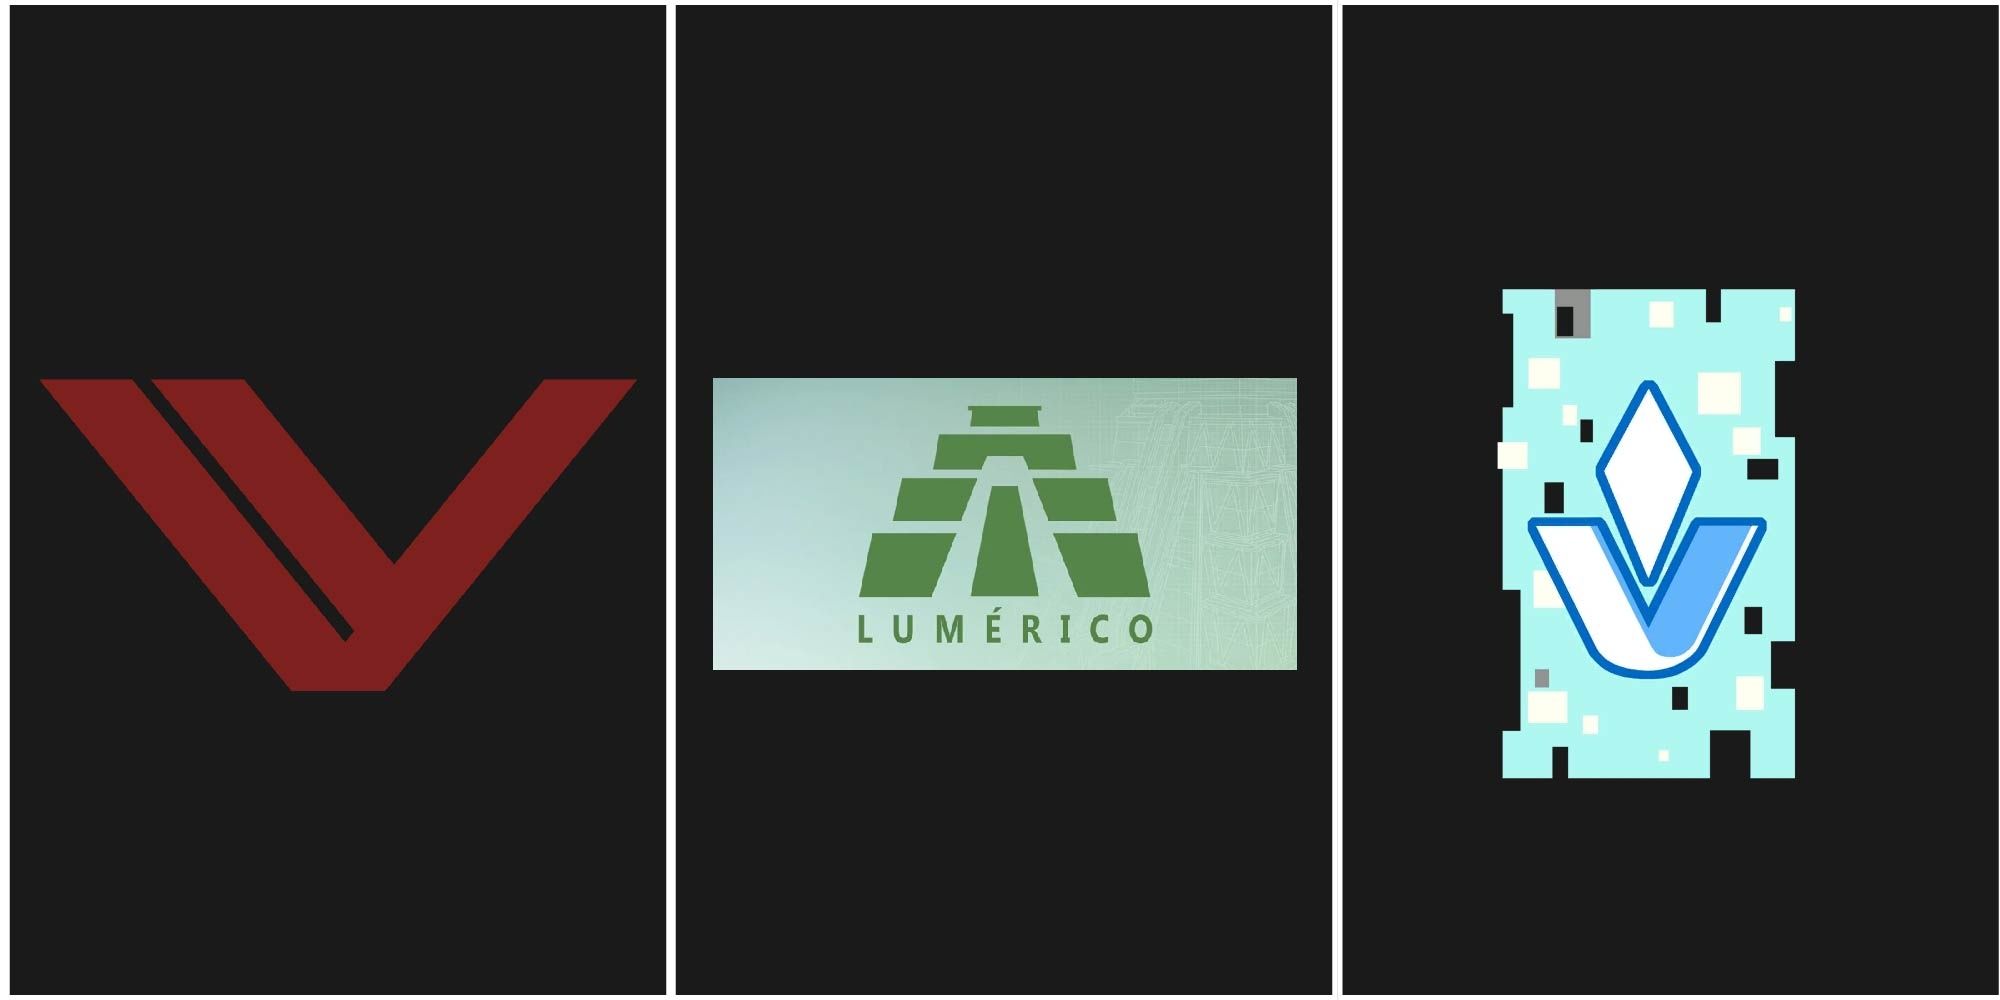 Logos for Volskaya Industries, LumériCo and Vishkar Corporation from Overwatch 2